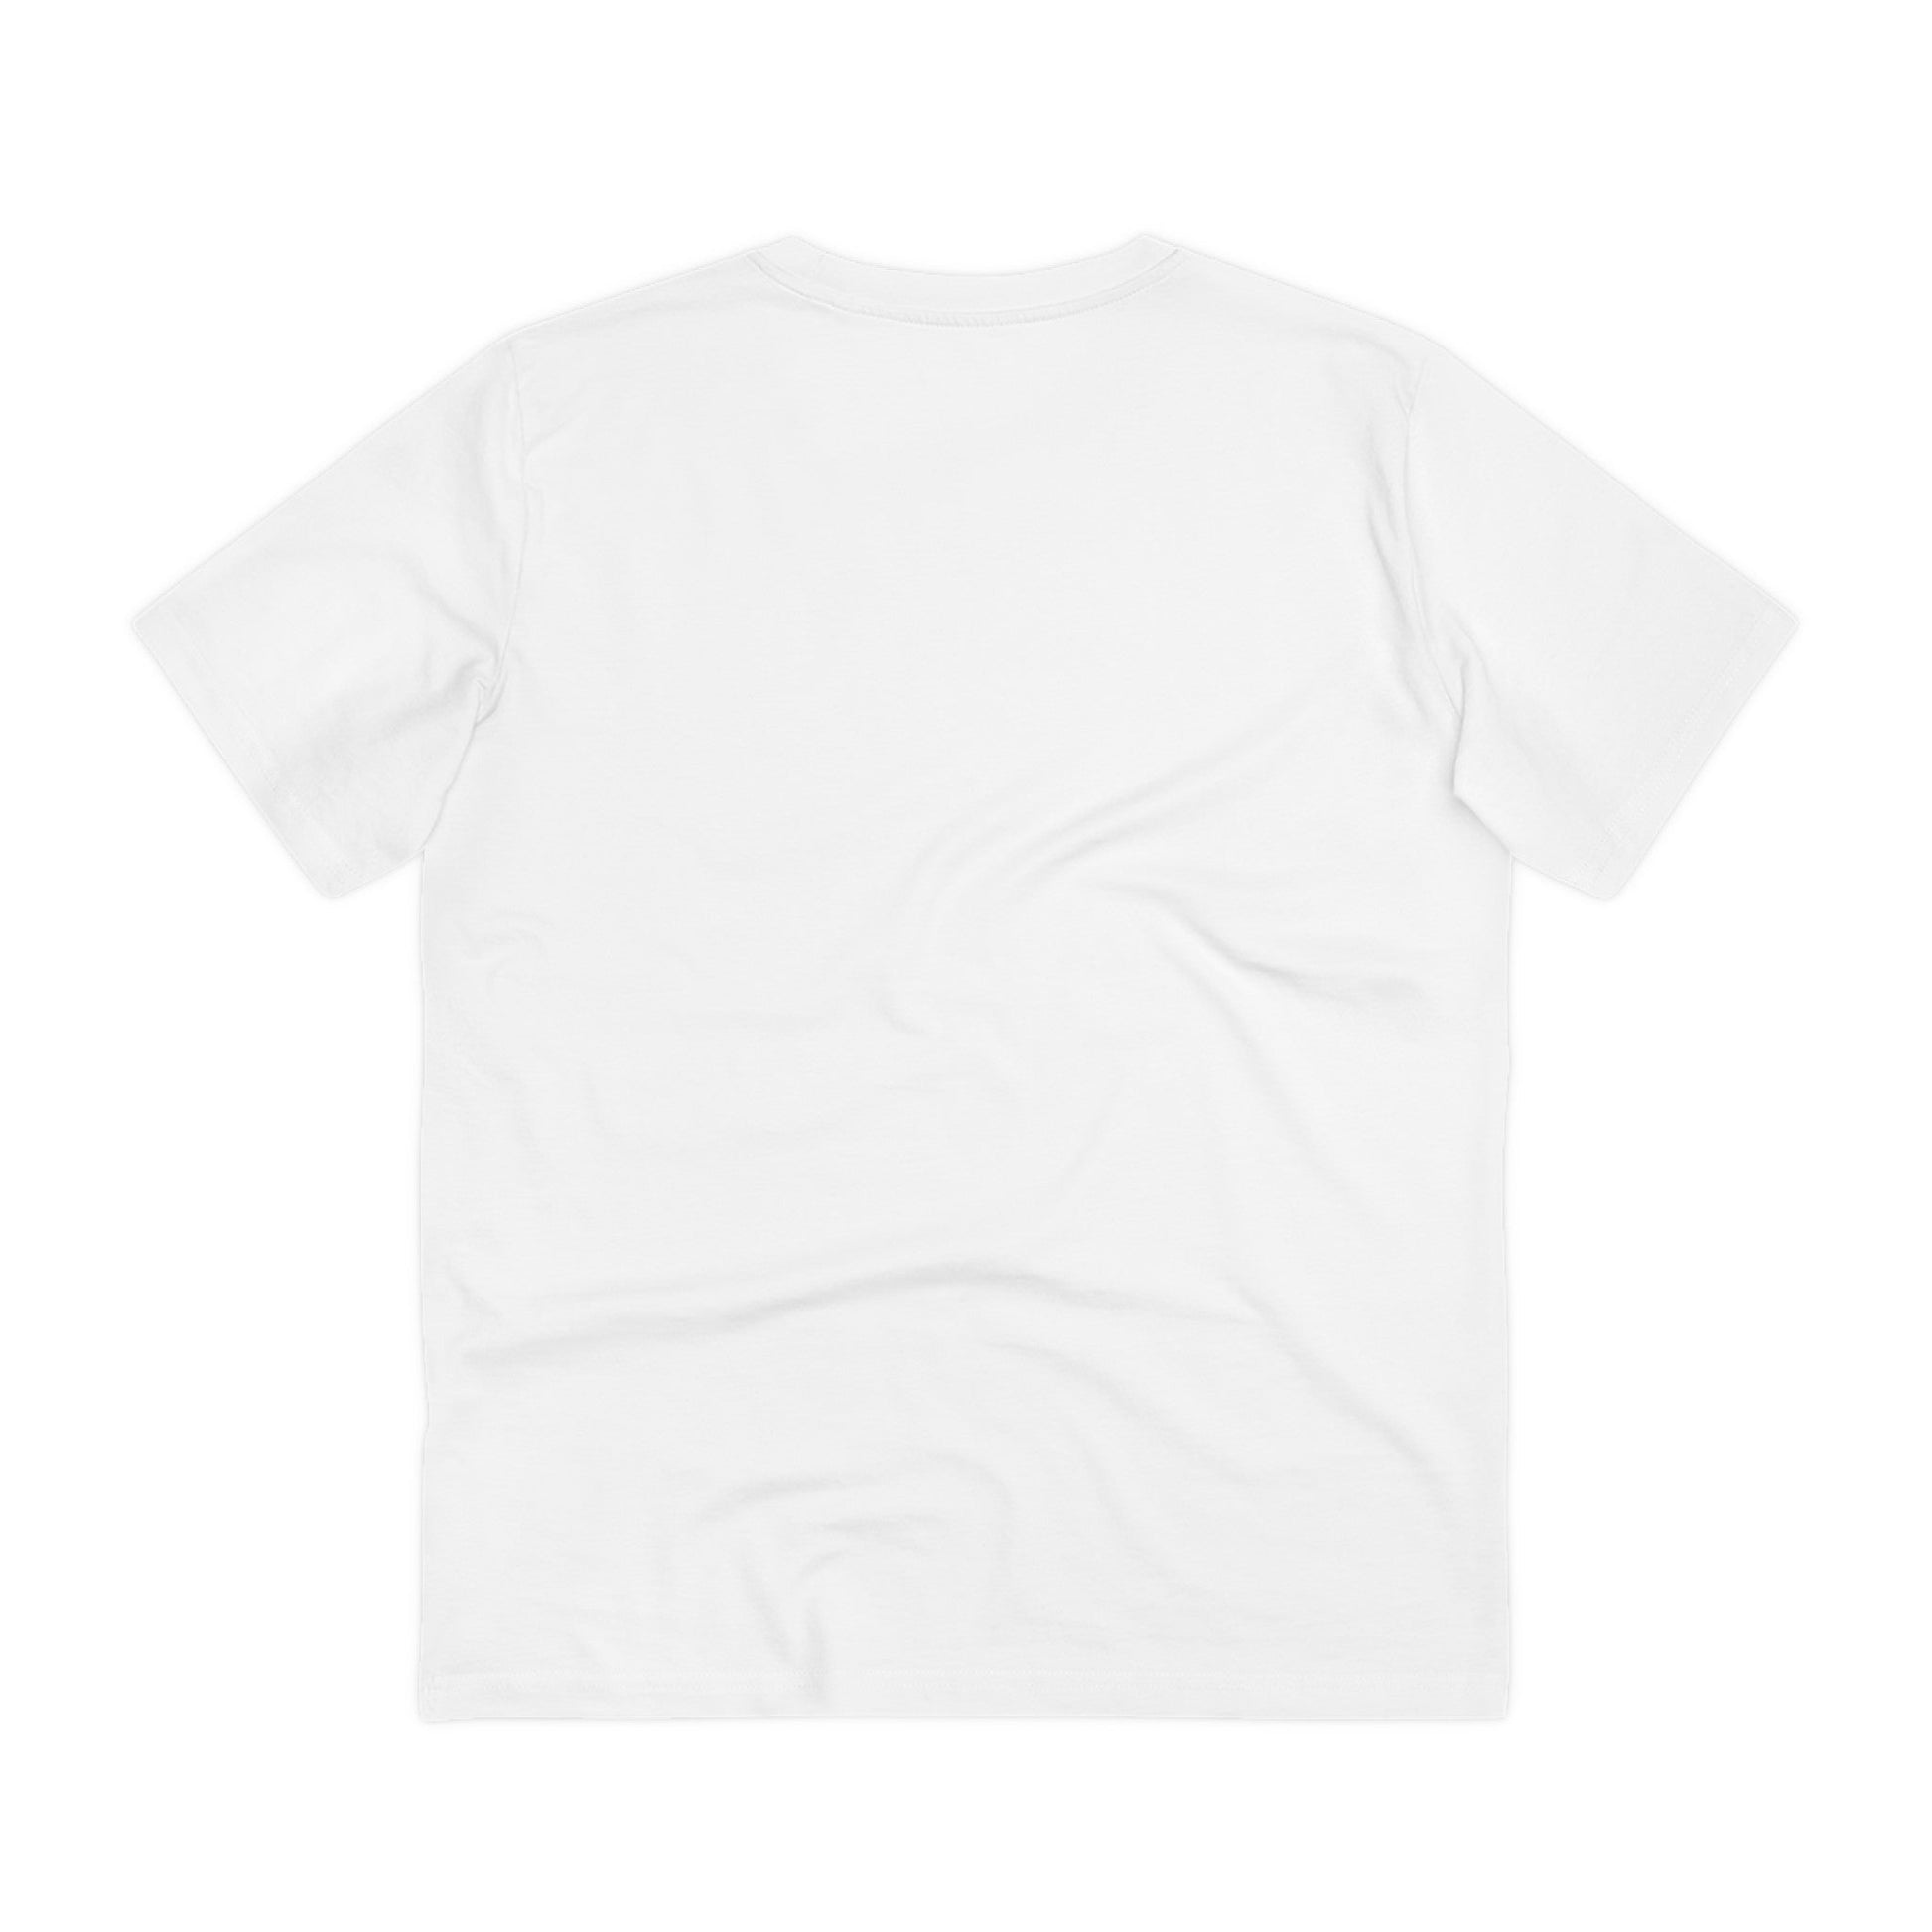 Printify T-Shirt Standing Alien with open arms - Alien Warrior - Front Design